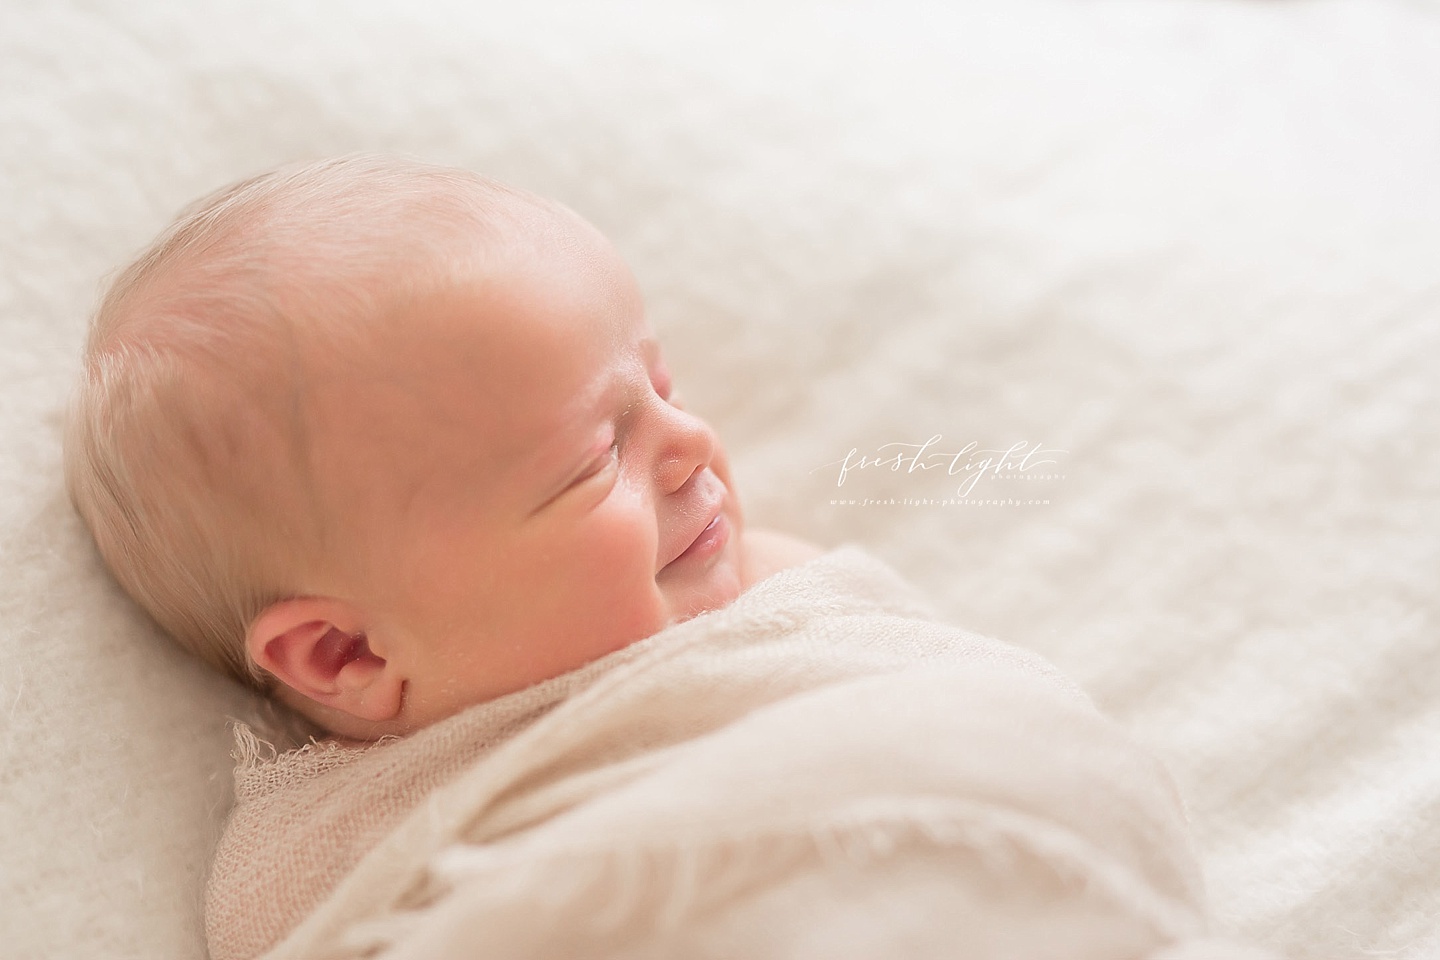 Fresh Light Photography Houston newborn photographer